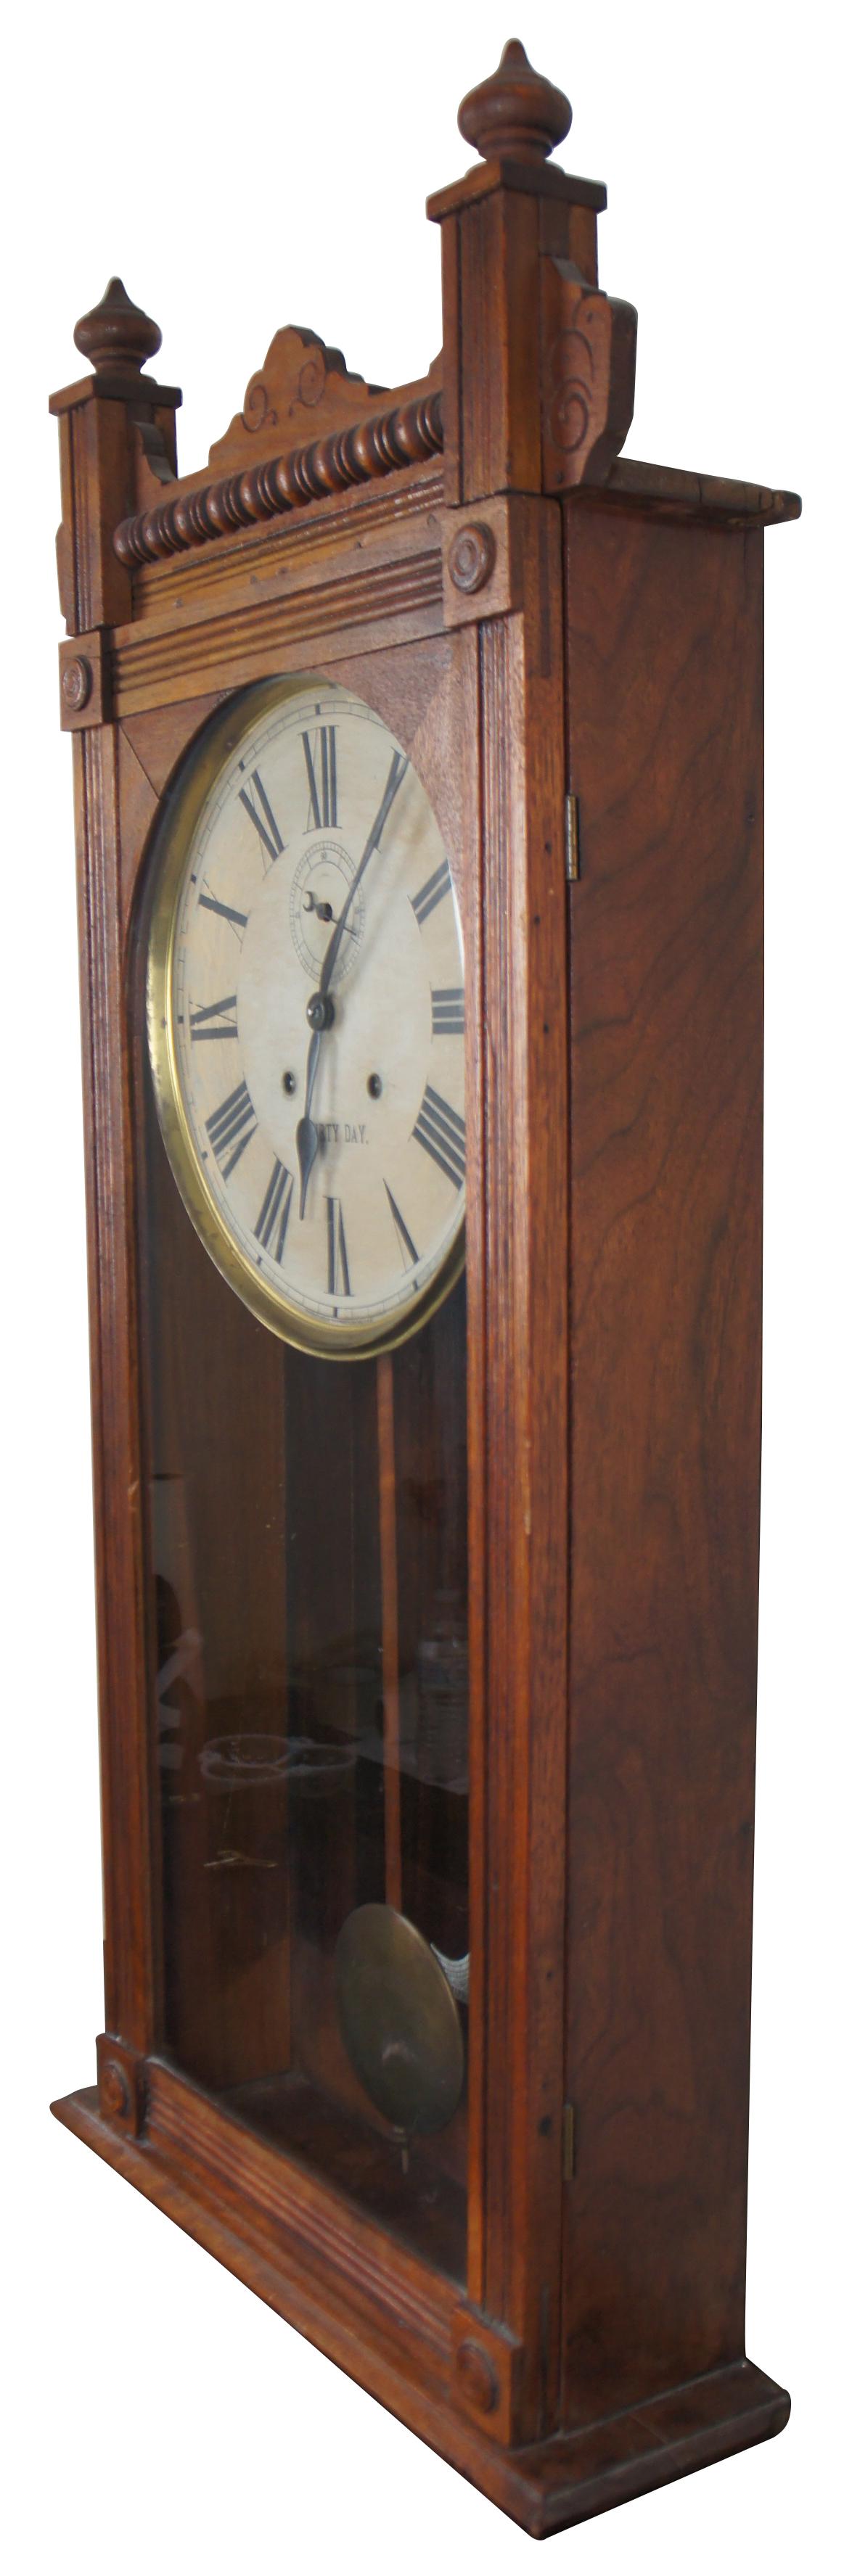 waterbury clock models